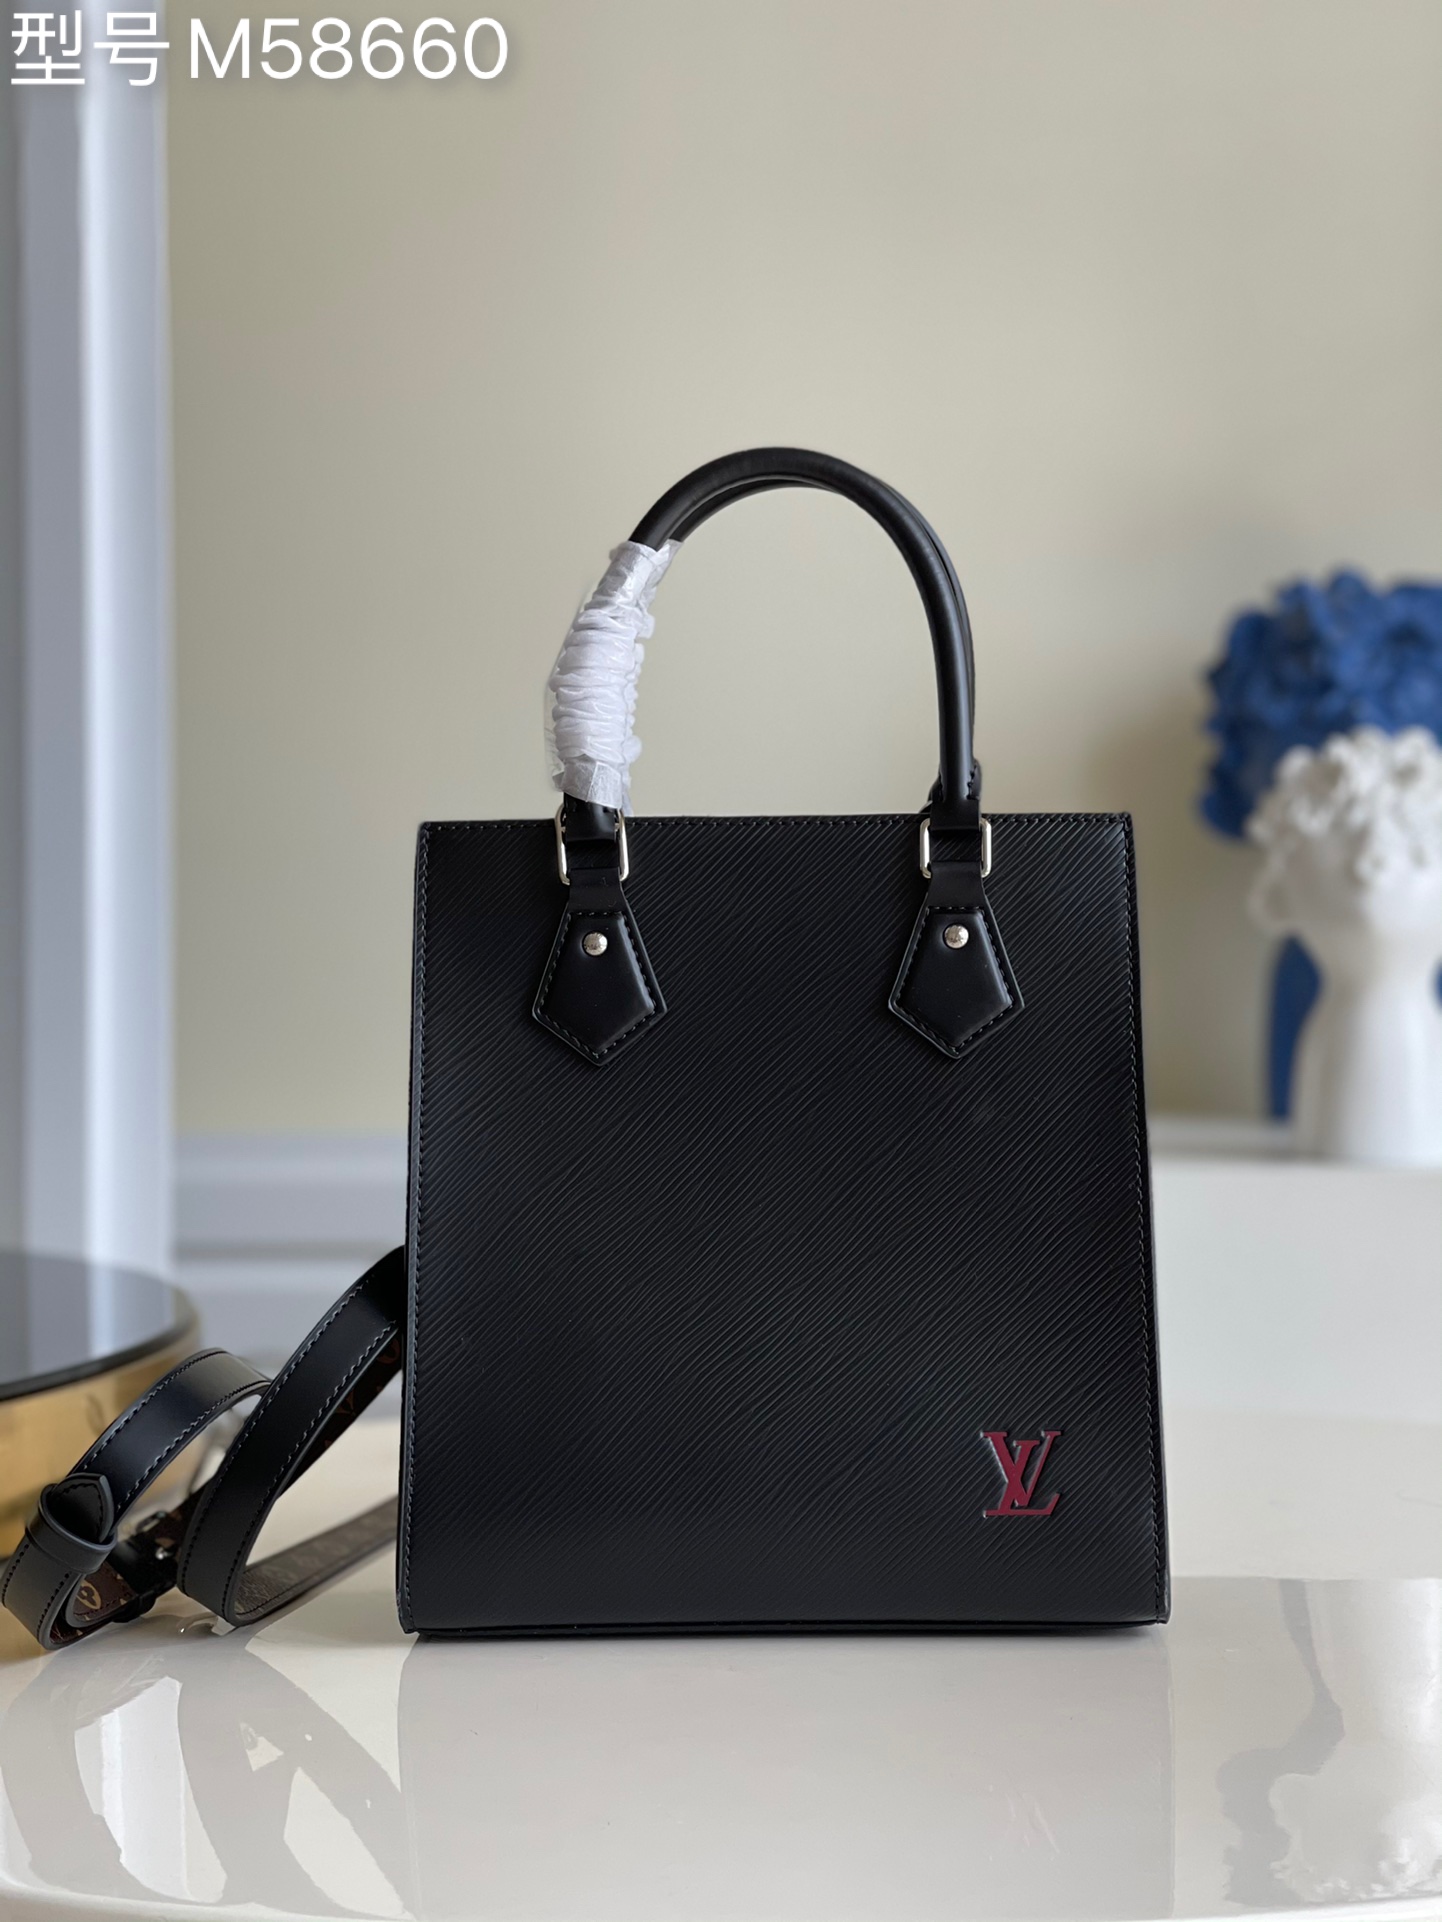 Louis Vuitton LV Sac Plat Bags Handbags Replica Best
 Epi M58660